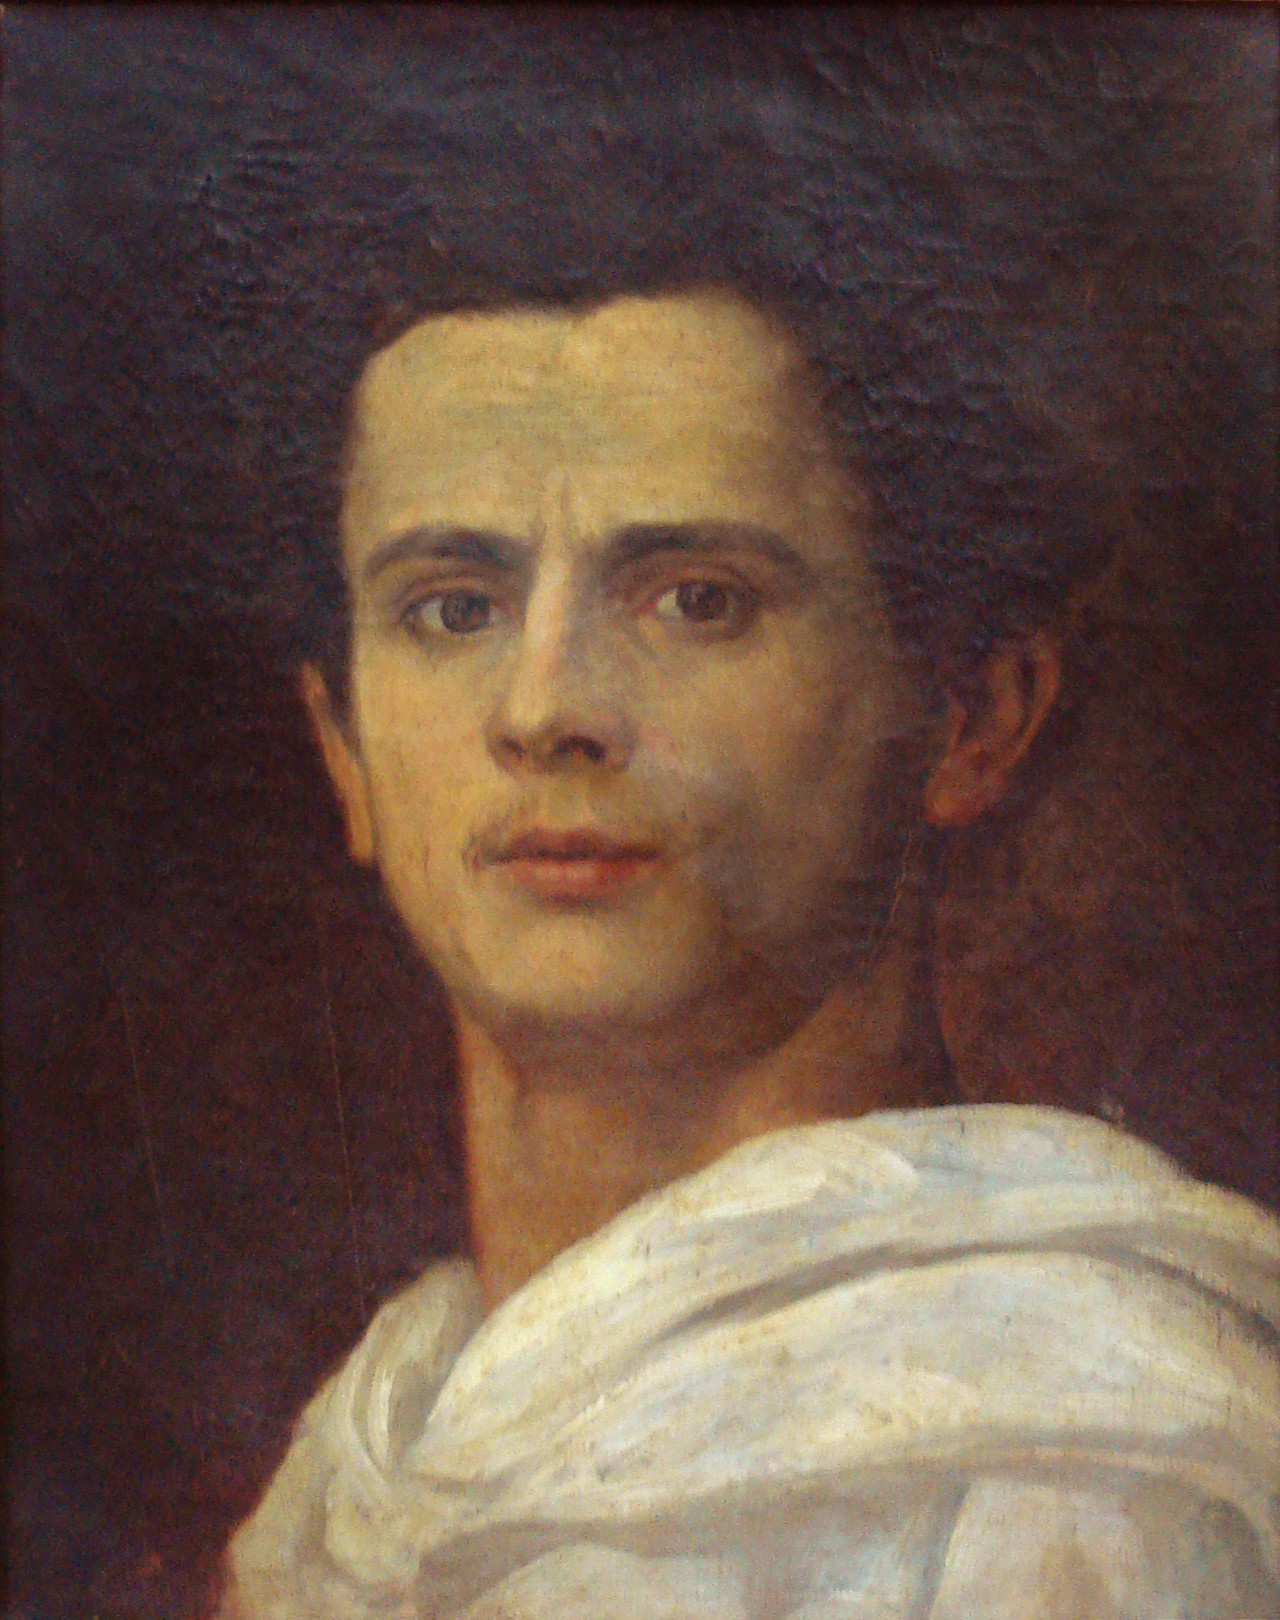 Jose Ferraz Almeida Júnior - 8 May 1850 - 13 November 1899